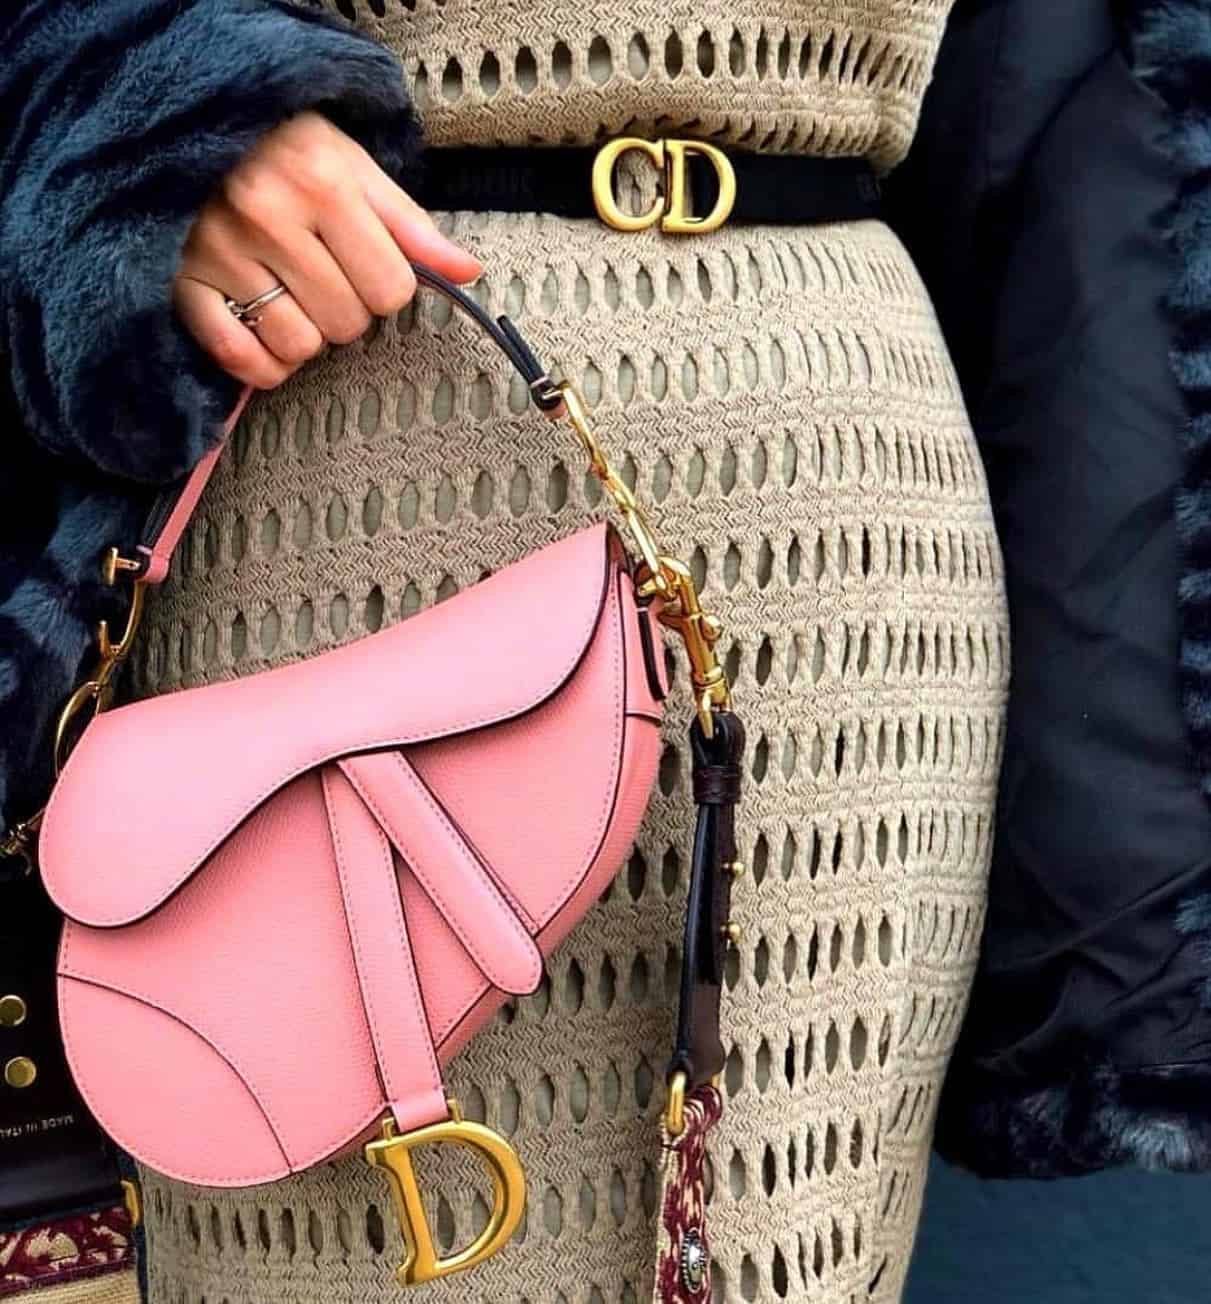 Dior Saddle bag price increase 2023